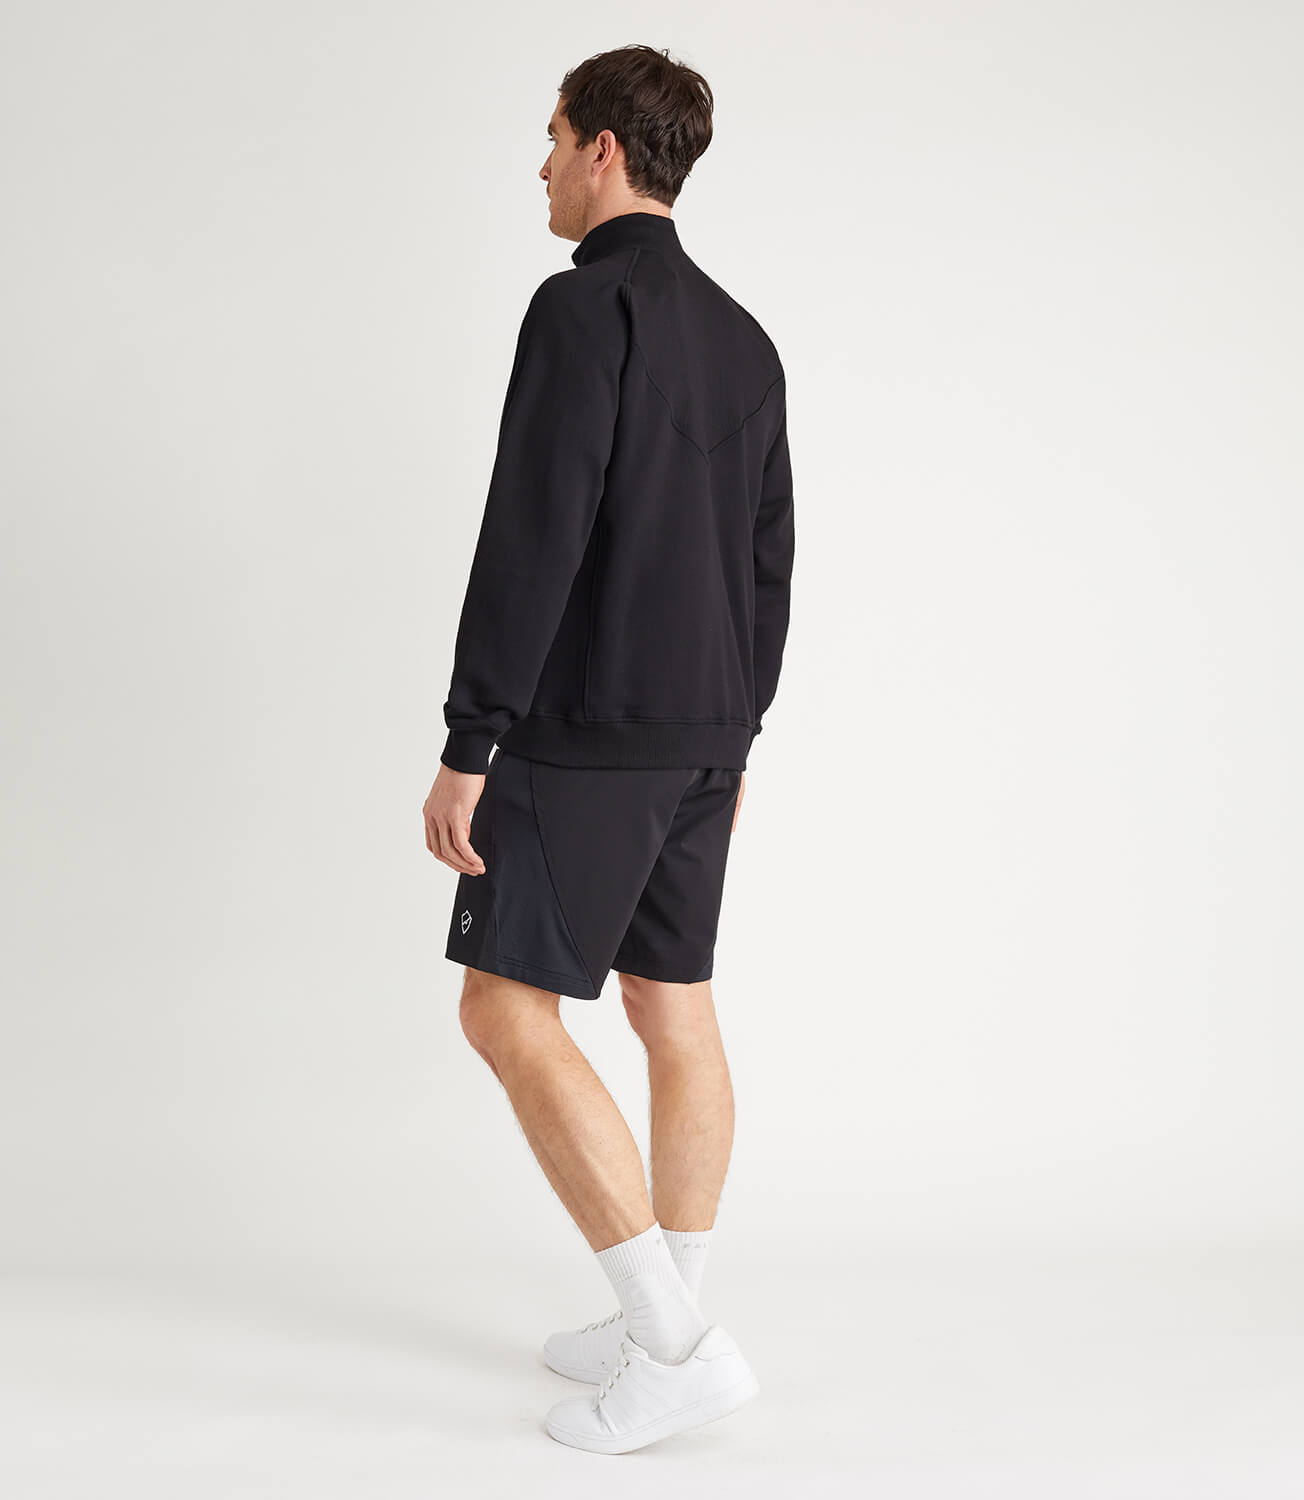 black cotton jacket casual track zippy activewear sportswear fitness tennis 